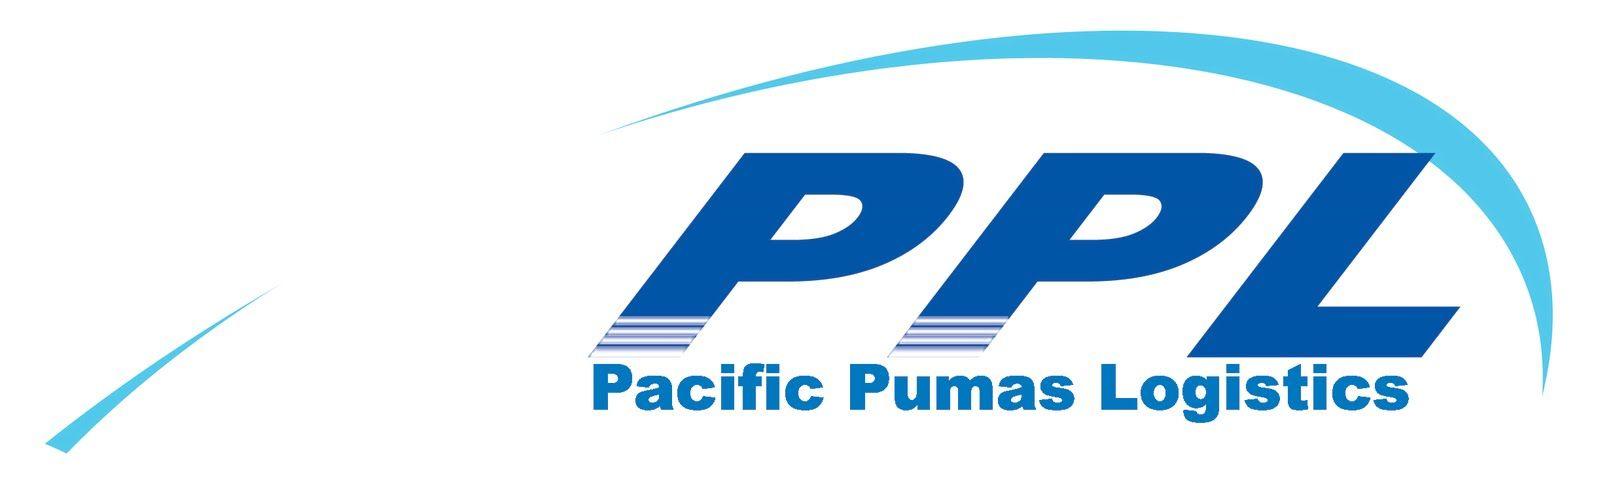 PPL Logo - LEON's Fotografía: PPL Logistics Logo design